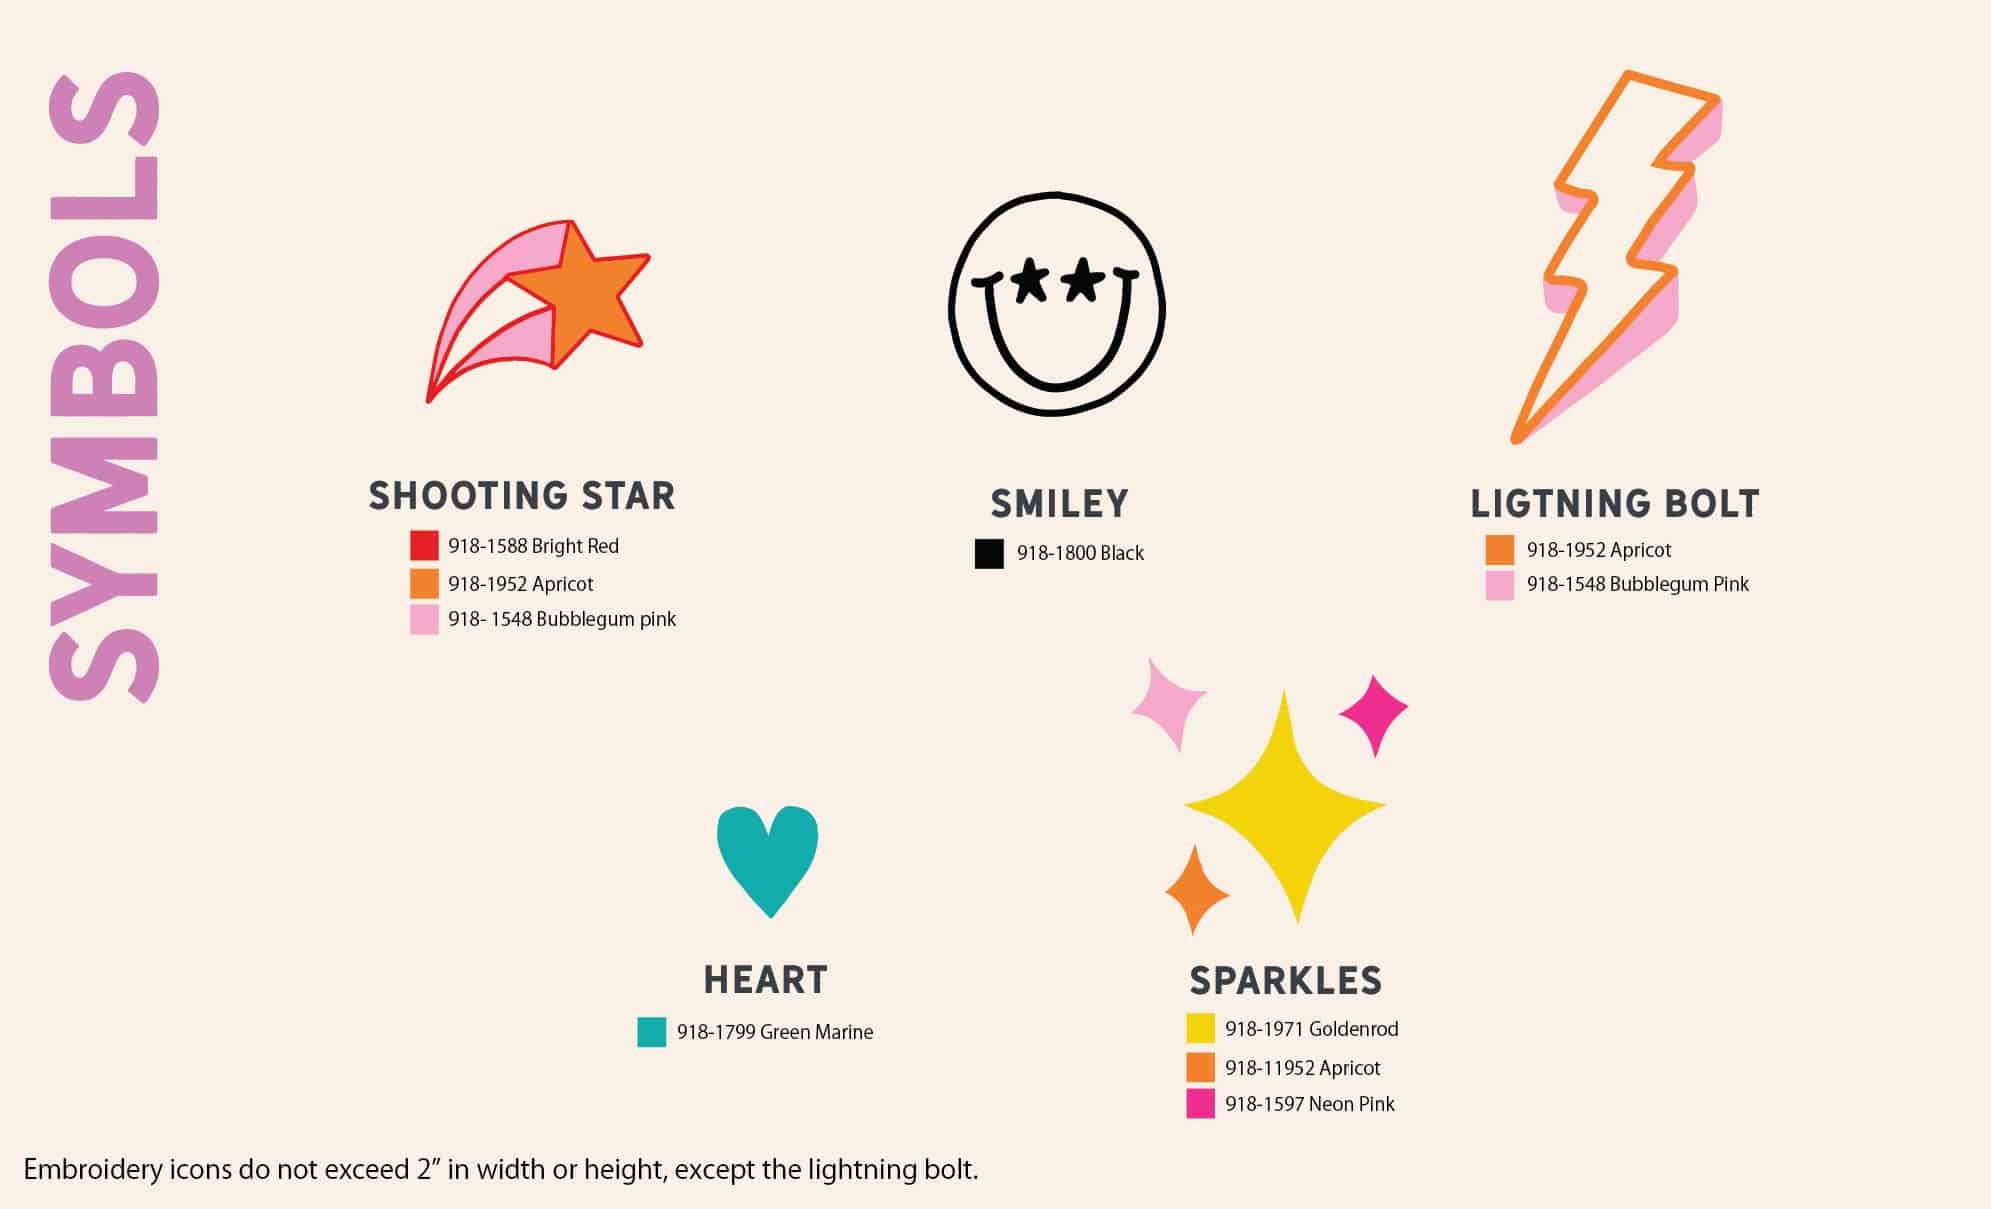 symbols like shooting star, smiley face, lightning bolt, heart and sparkle